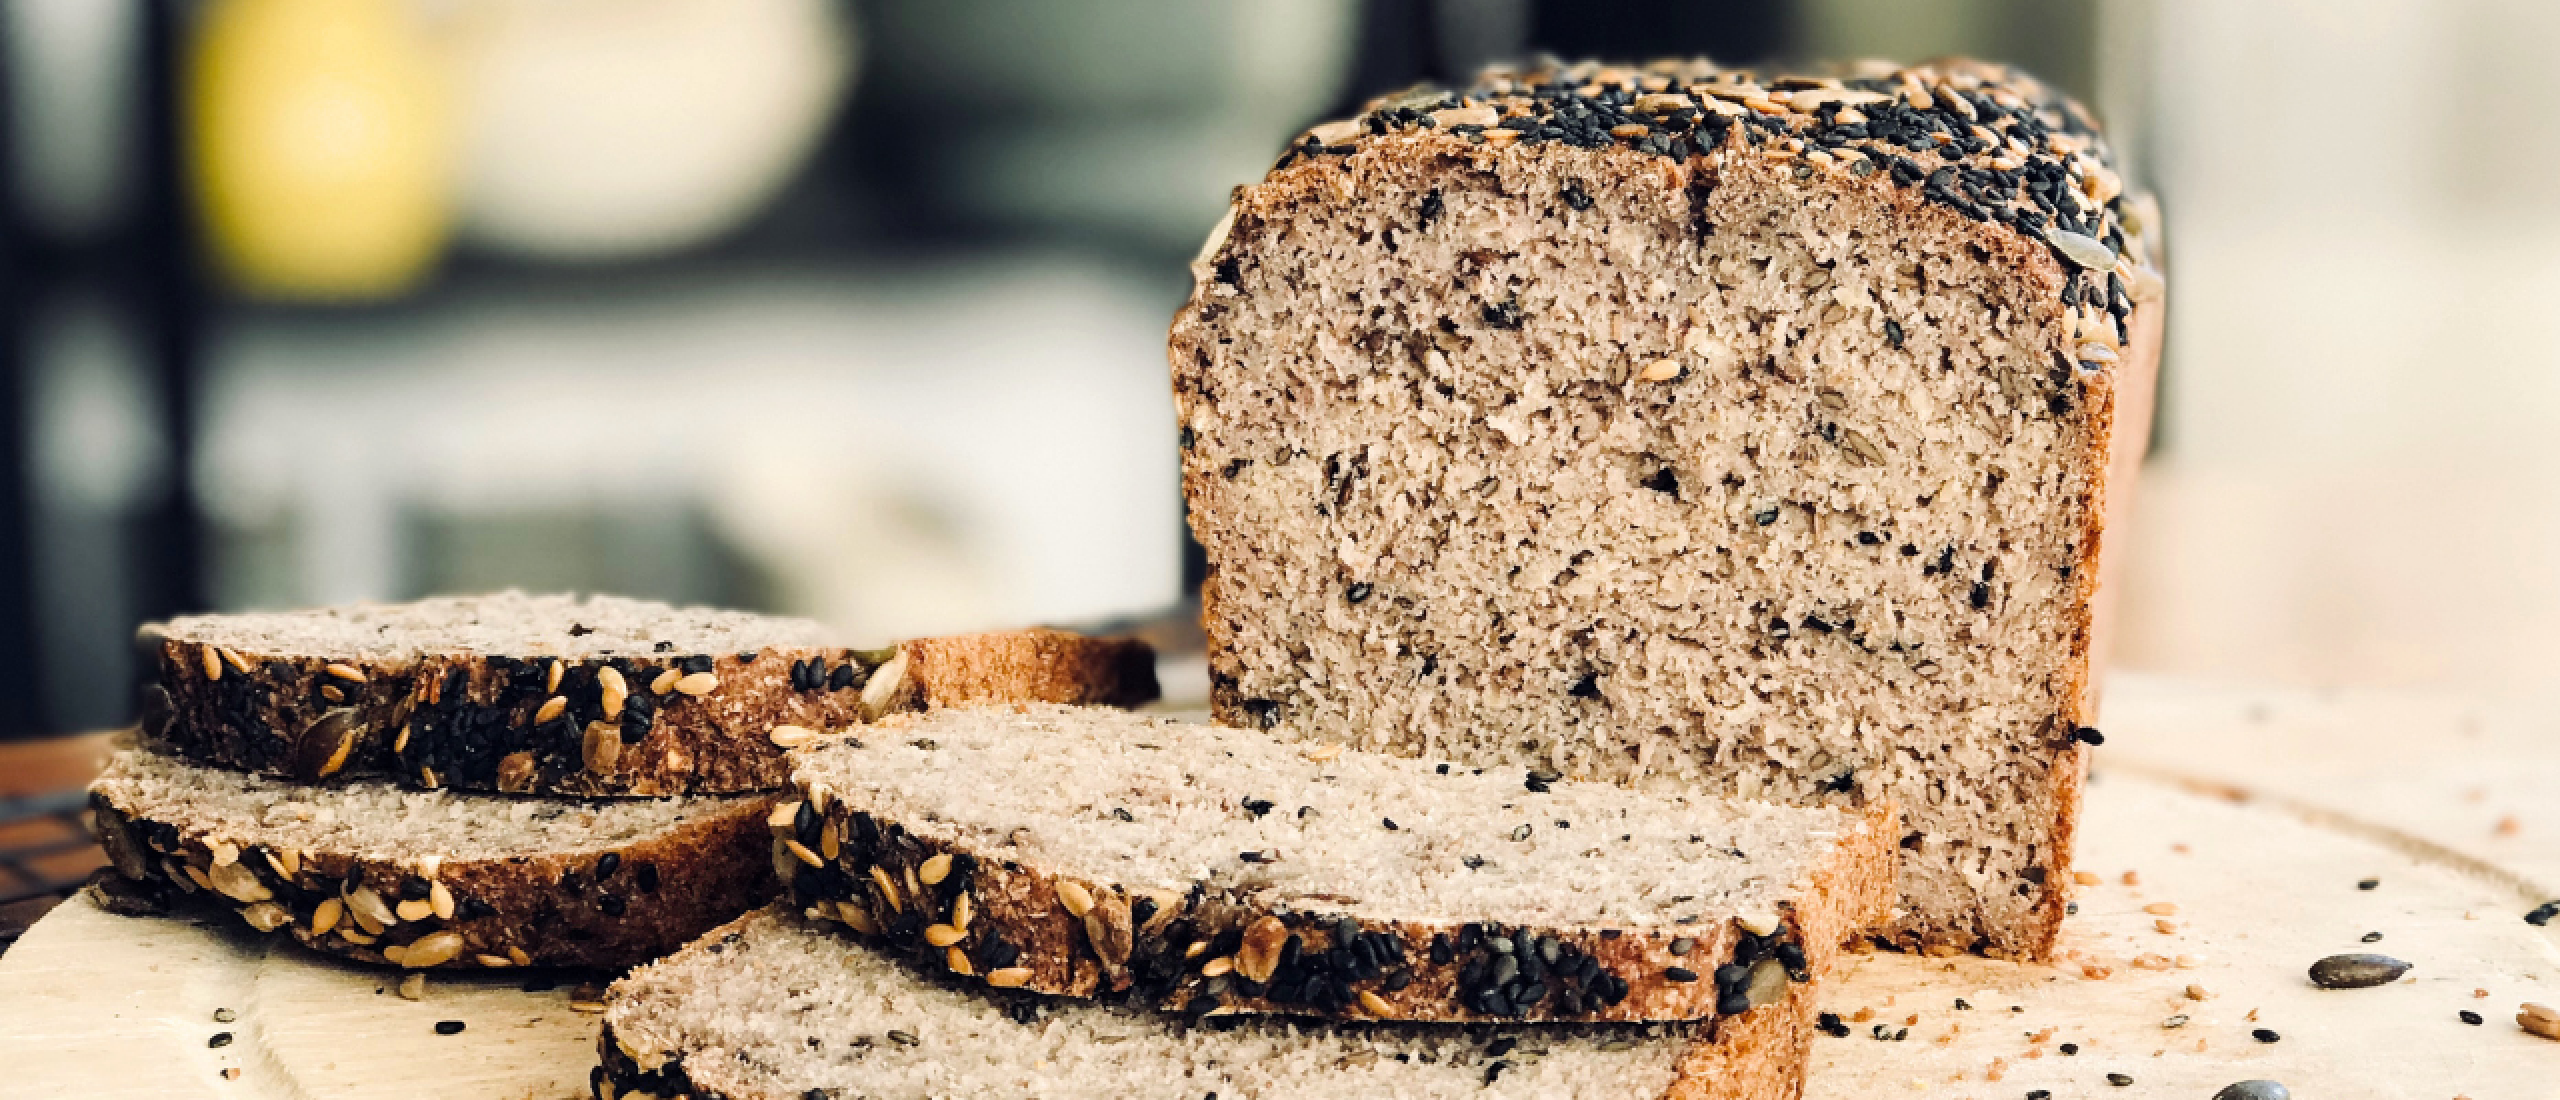 Koolhydraatarm glutenvrij brood - keto en vegan - header Marije Bakt Brood